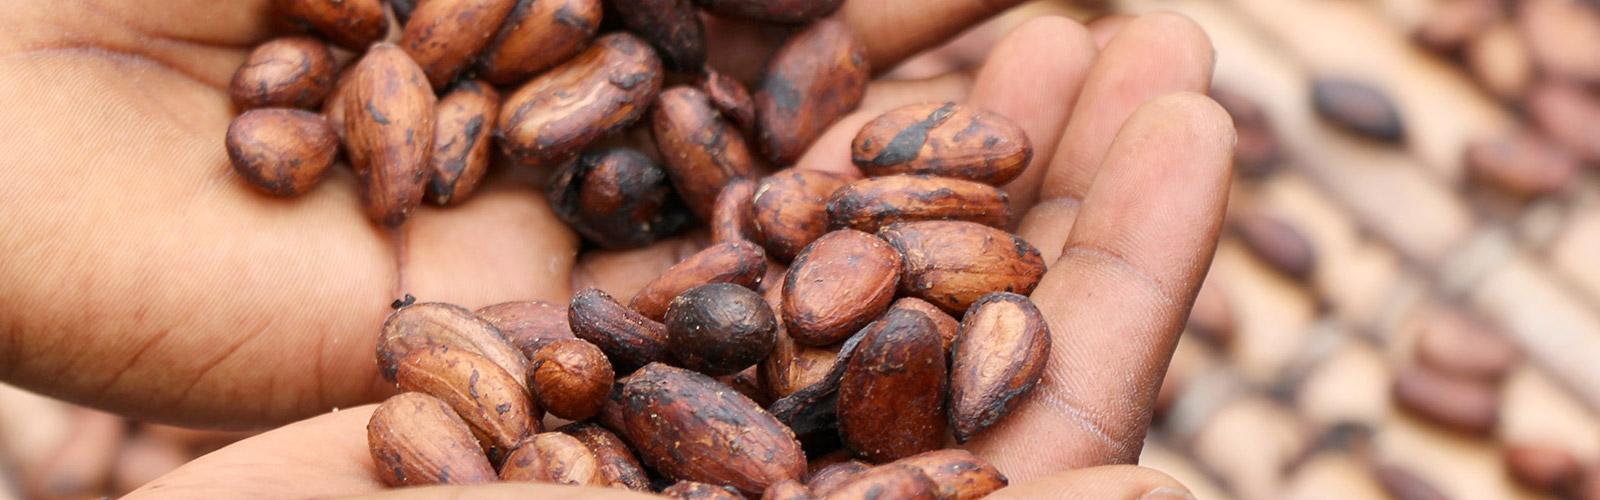 Fèves de cacao, Cameroun © E. Fidele, Unsplash